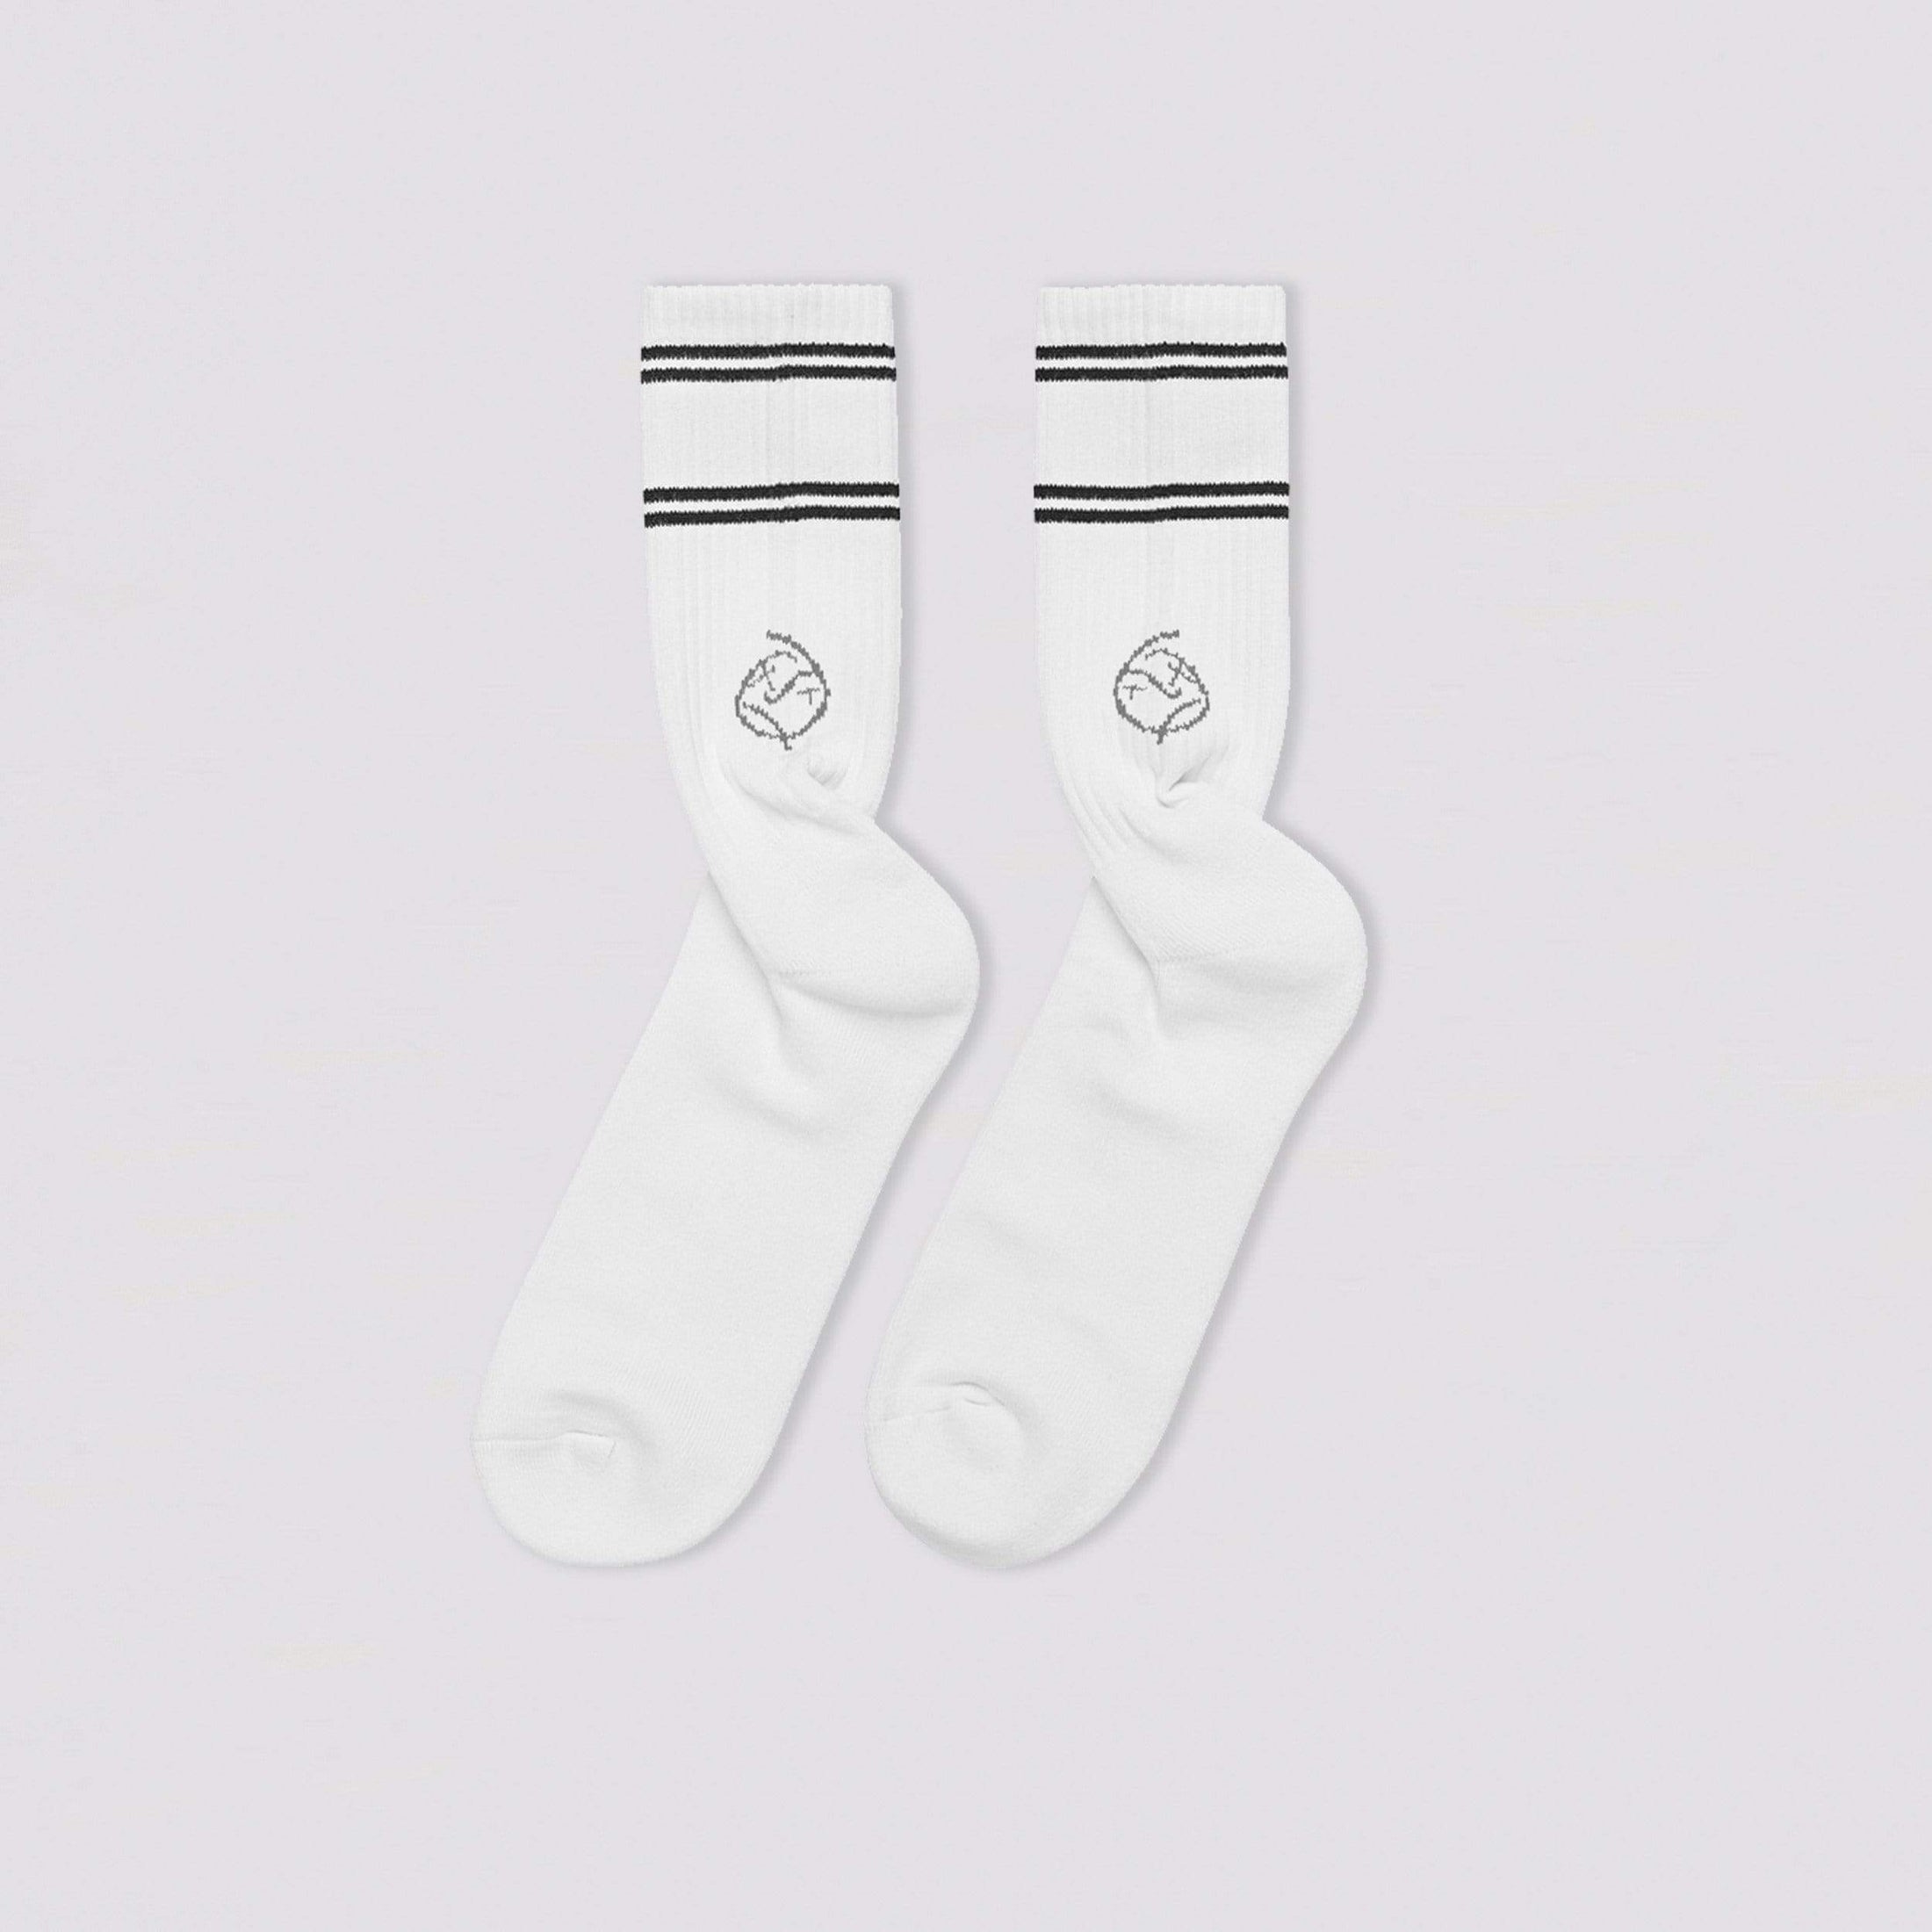 Polar Big Boy Socks White / Black / Grey